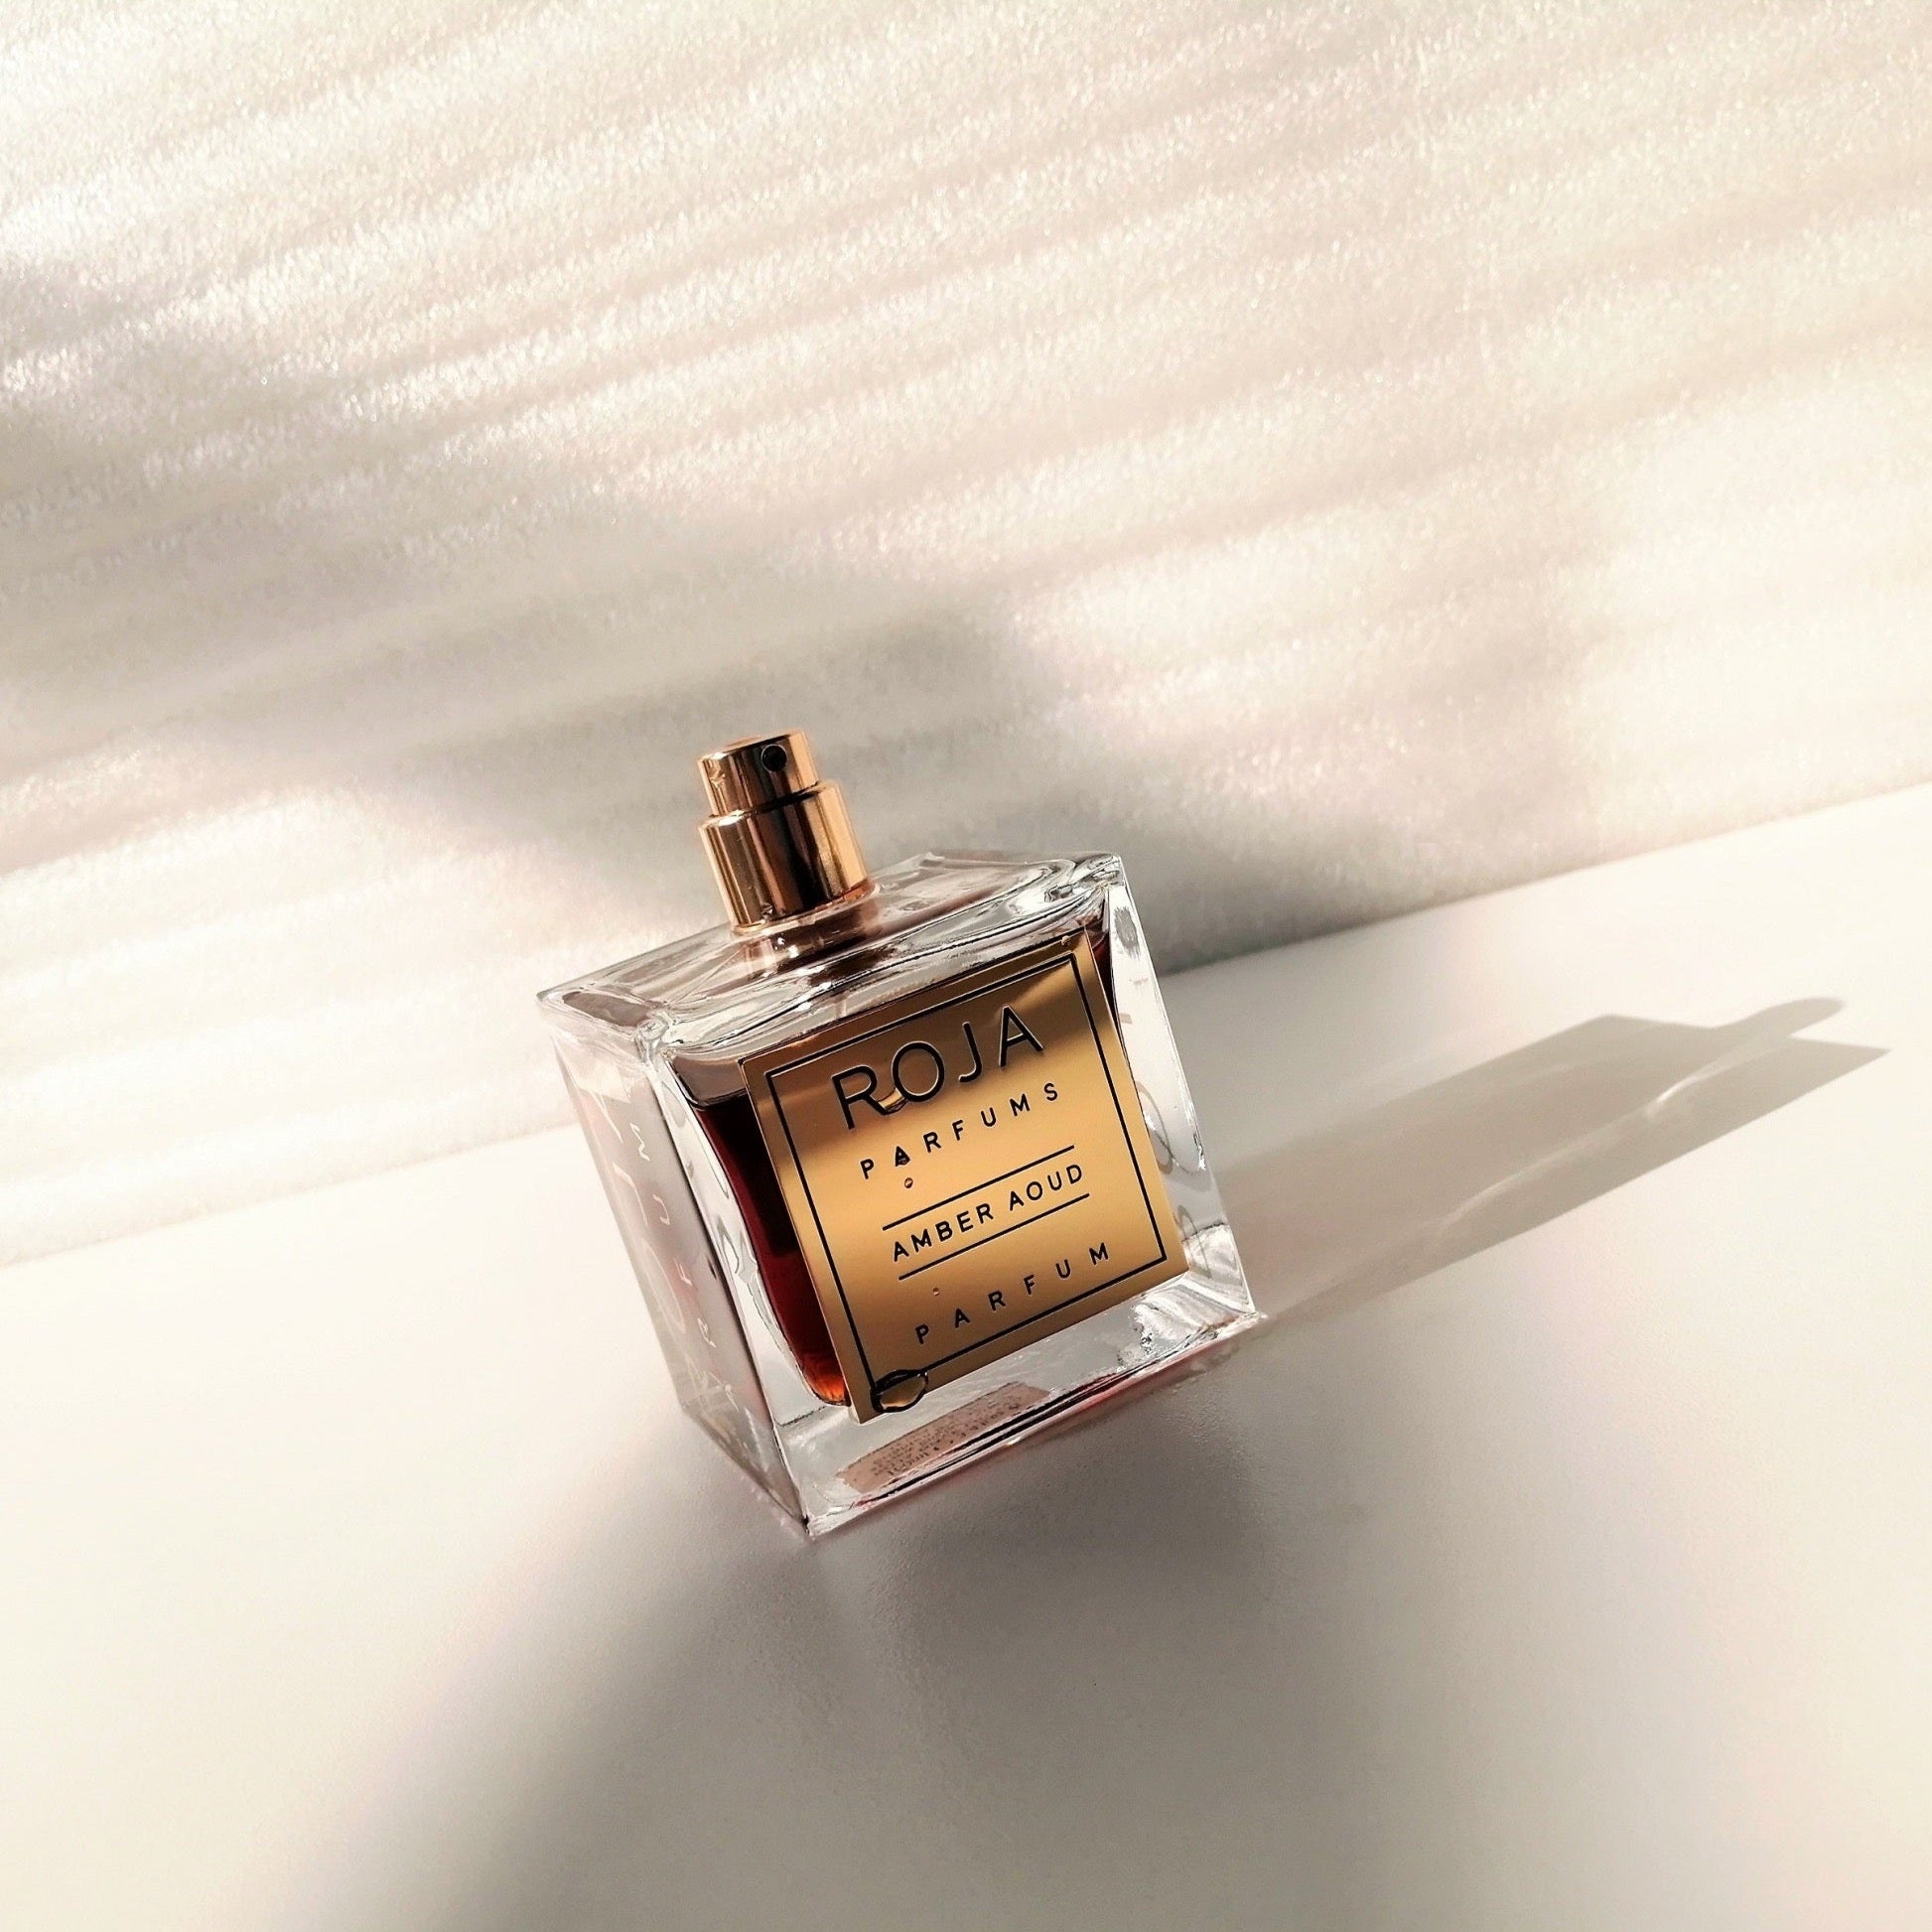 Roja Parfums Amber Aoud Parfum | My Perfume Shop Australia